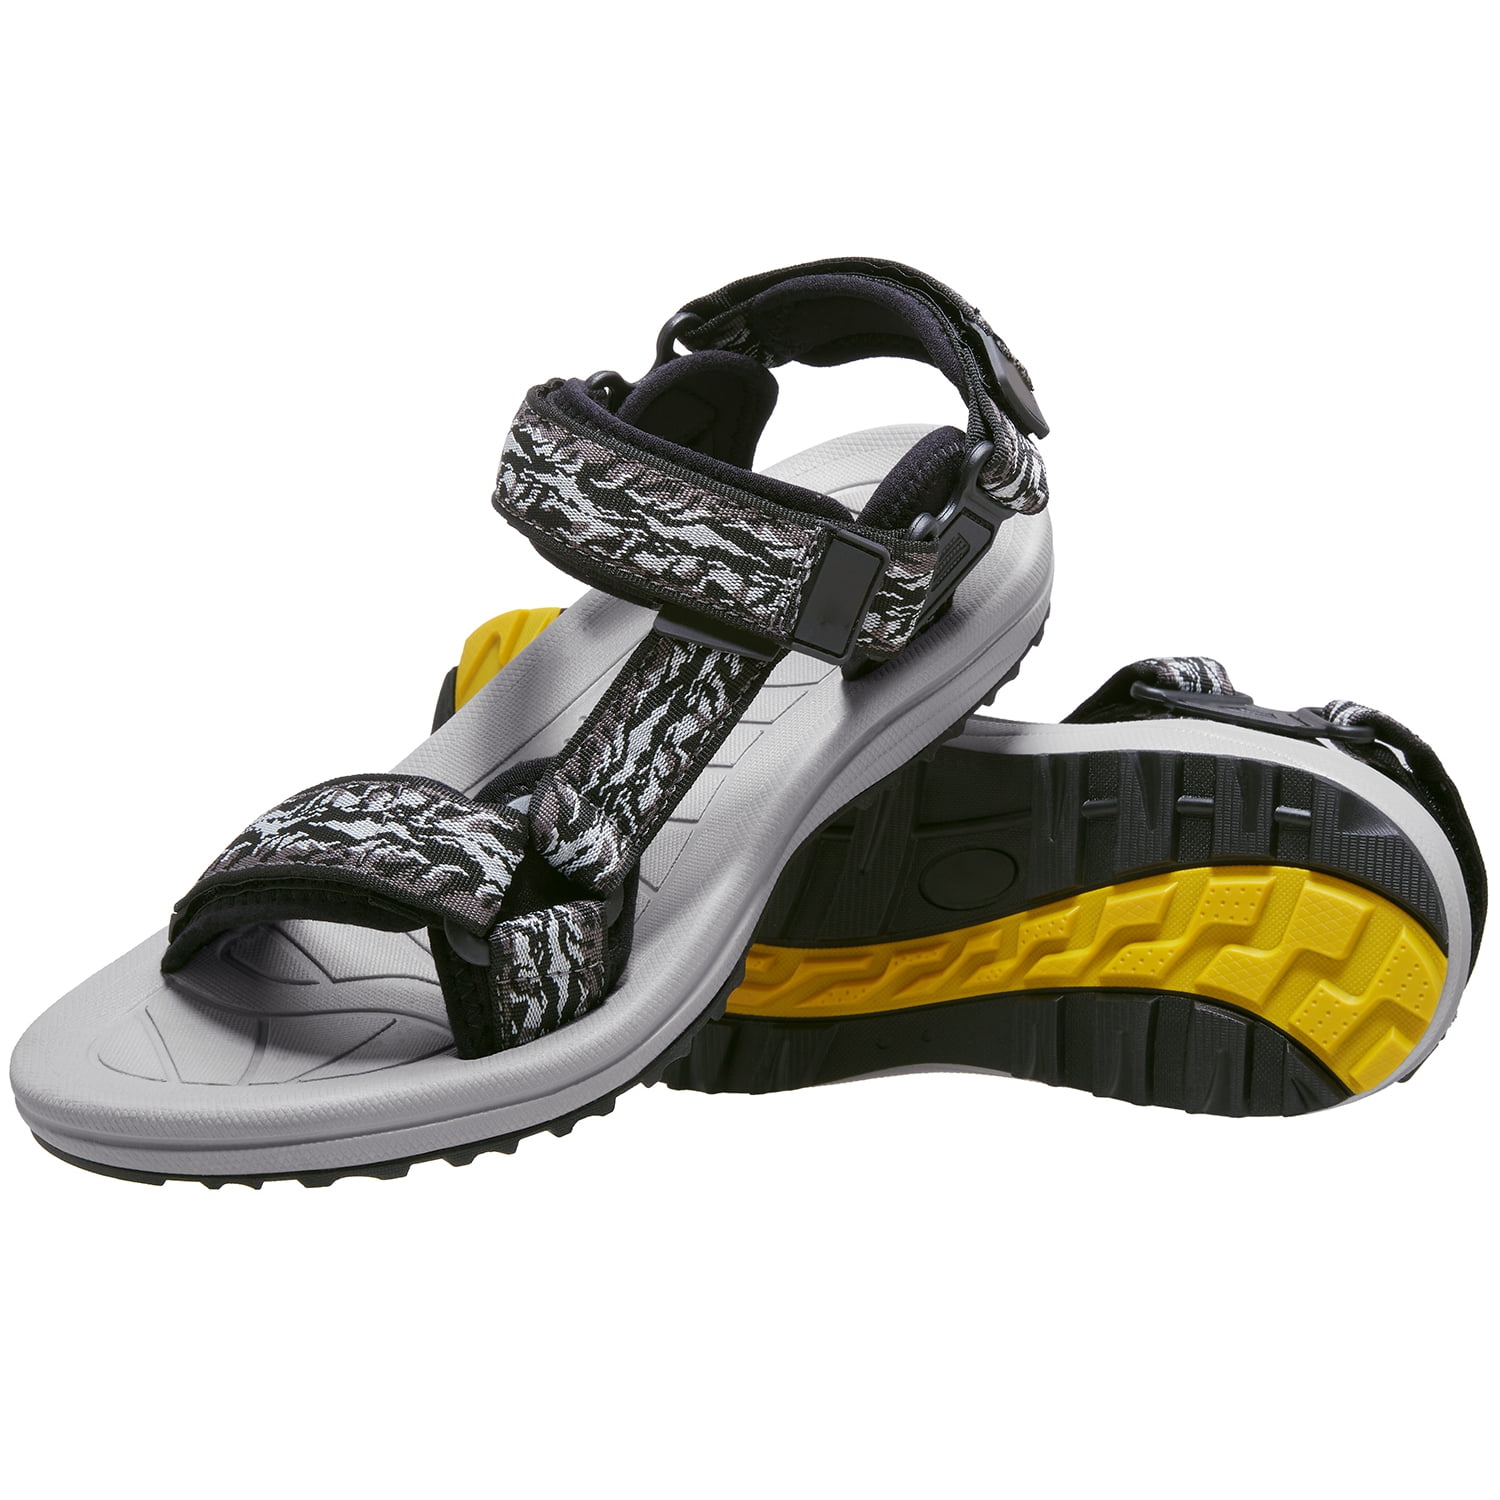 OutPro Men's Hiking Sandals Outdoor Sport Athletic Sandals Open Toe ...